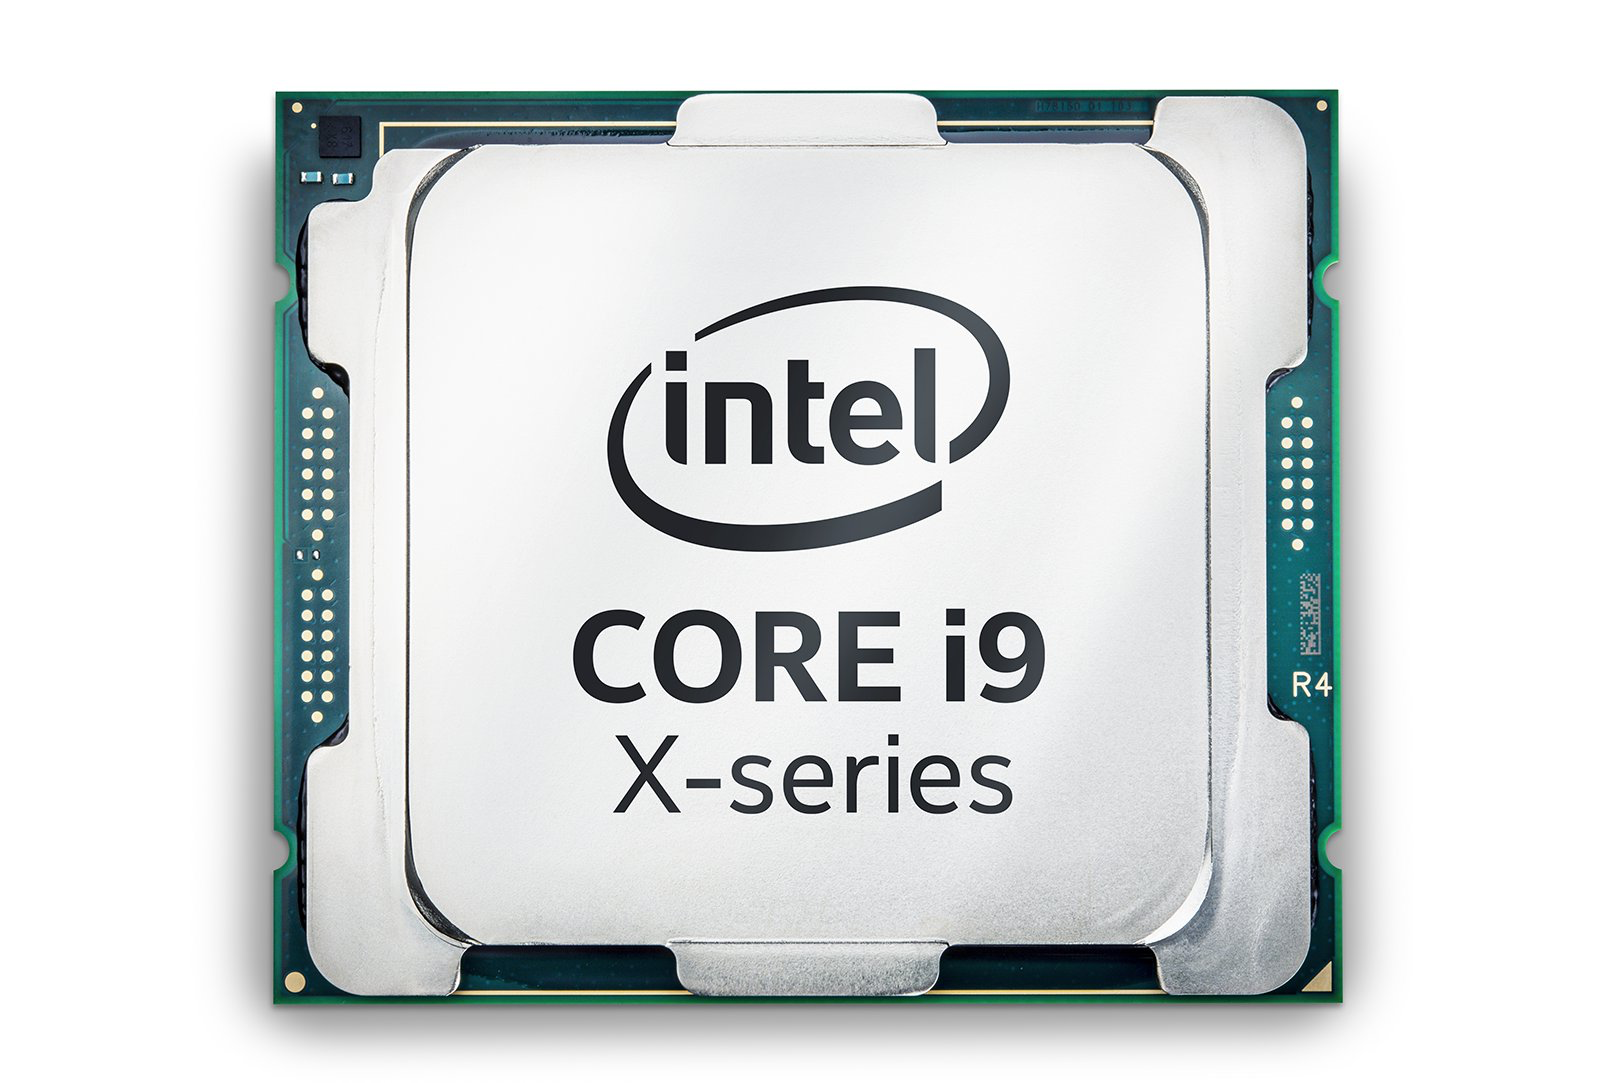 Intel X-Series Core processor